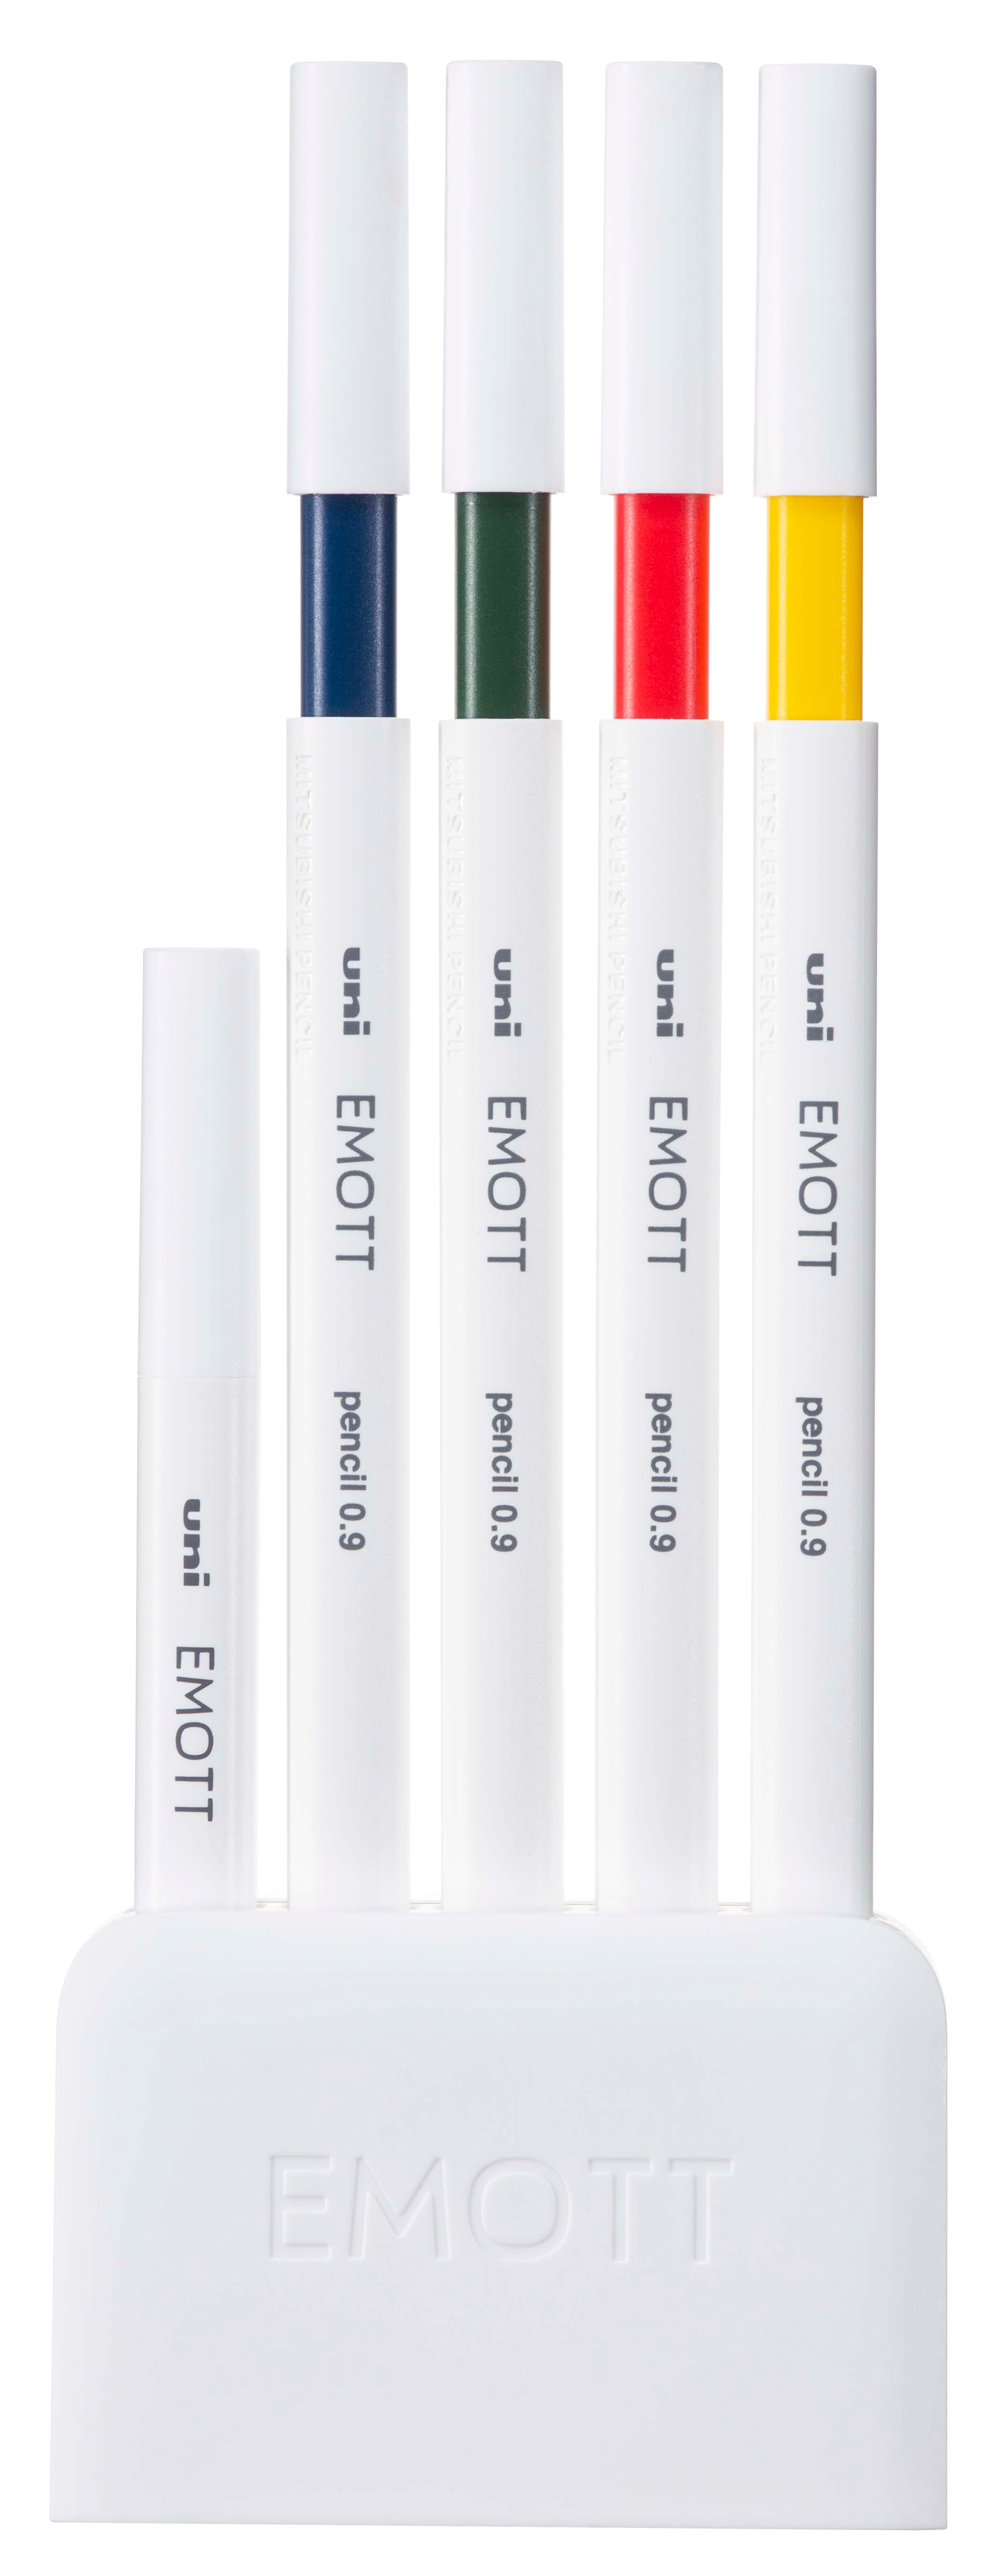 uni® EMOTT Colored Pencils